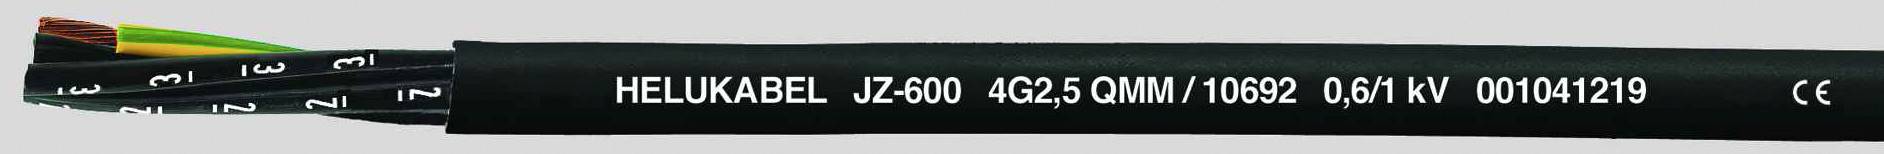 HELUKABEL JZ-600 Steuerleitung 7 G 0.50 mm² Schwarz 10558-500 500 m